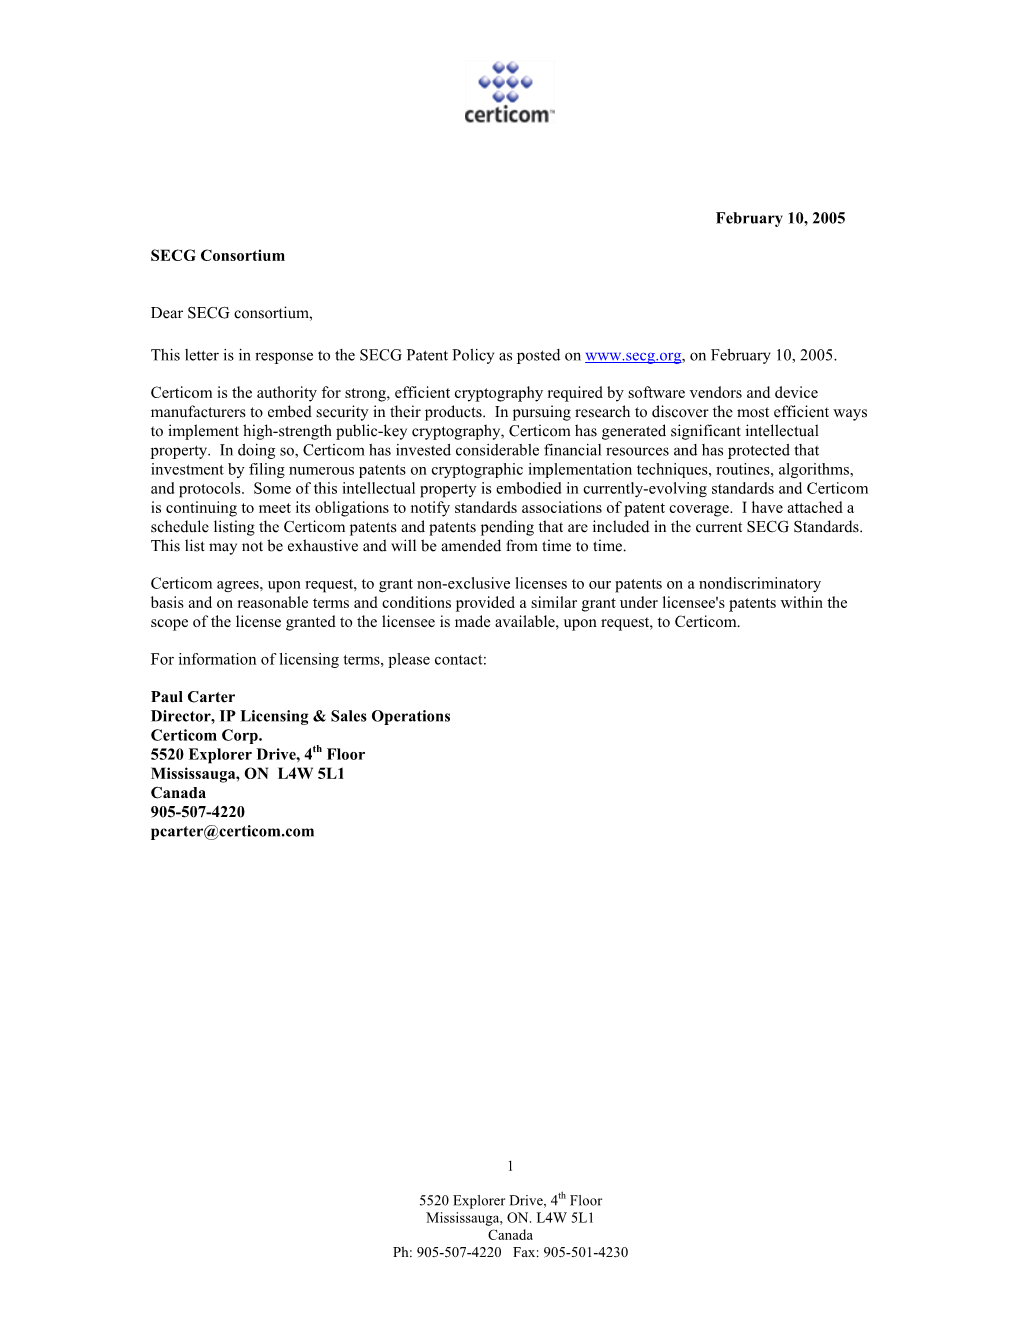 Certicom's Patent Letter to SECG